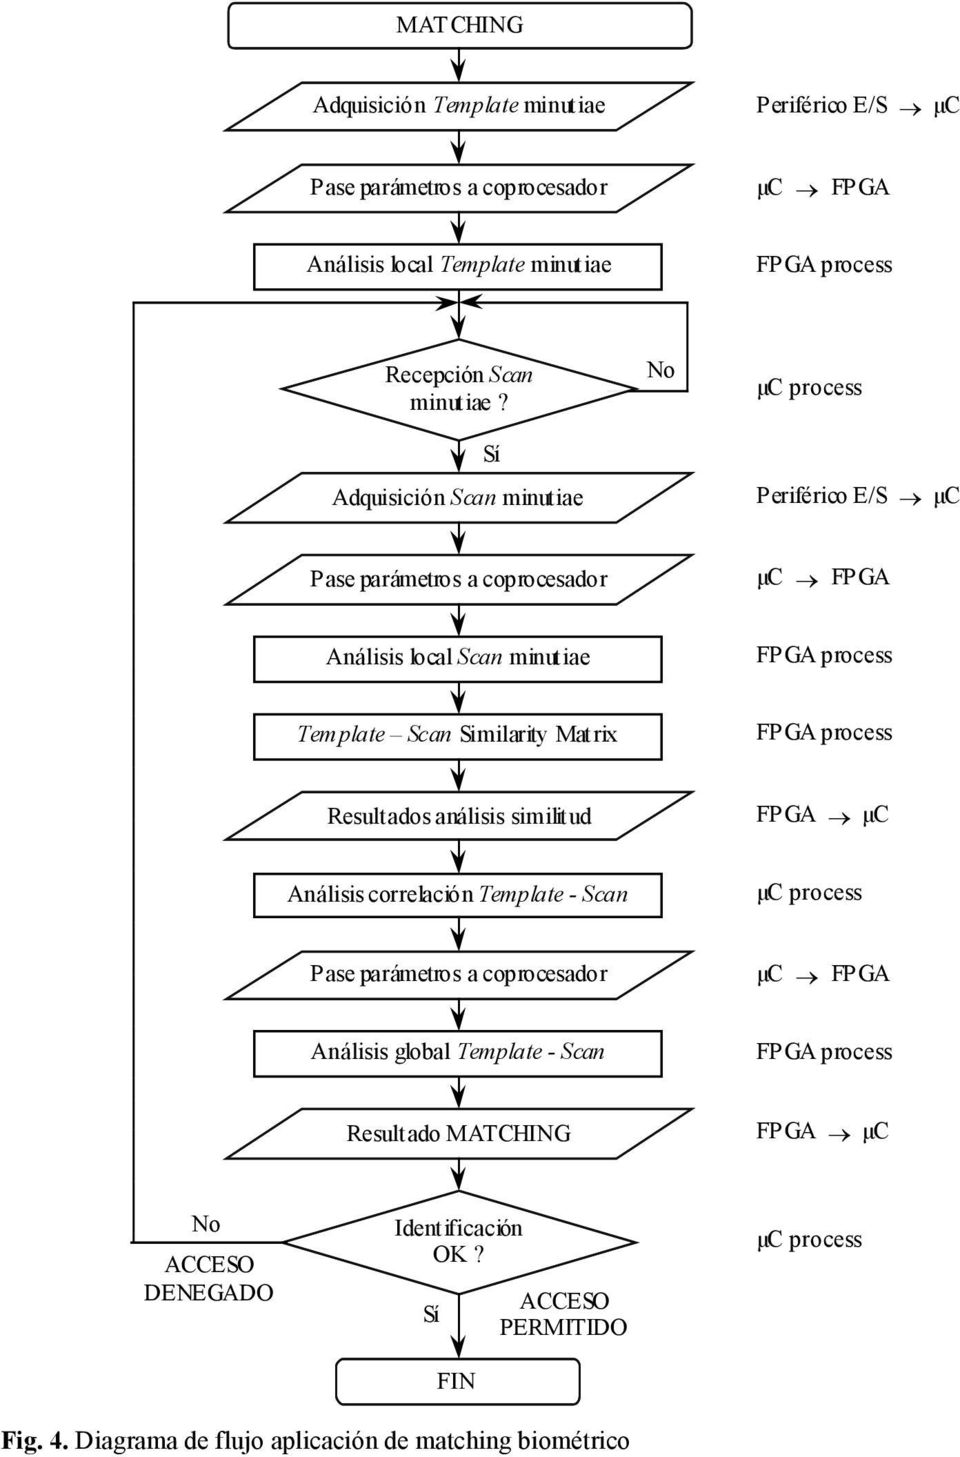 rix FPGA process Resultados análisis similitud FPGA µc Análisis correlación Template - Scan µc process Pase parámetros a coprocesador µc FP GA Análisis global Template -